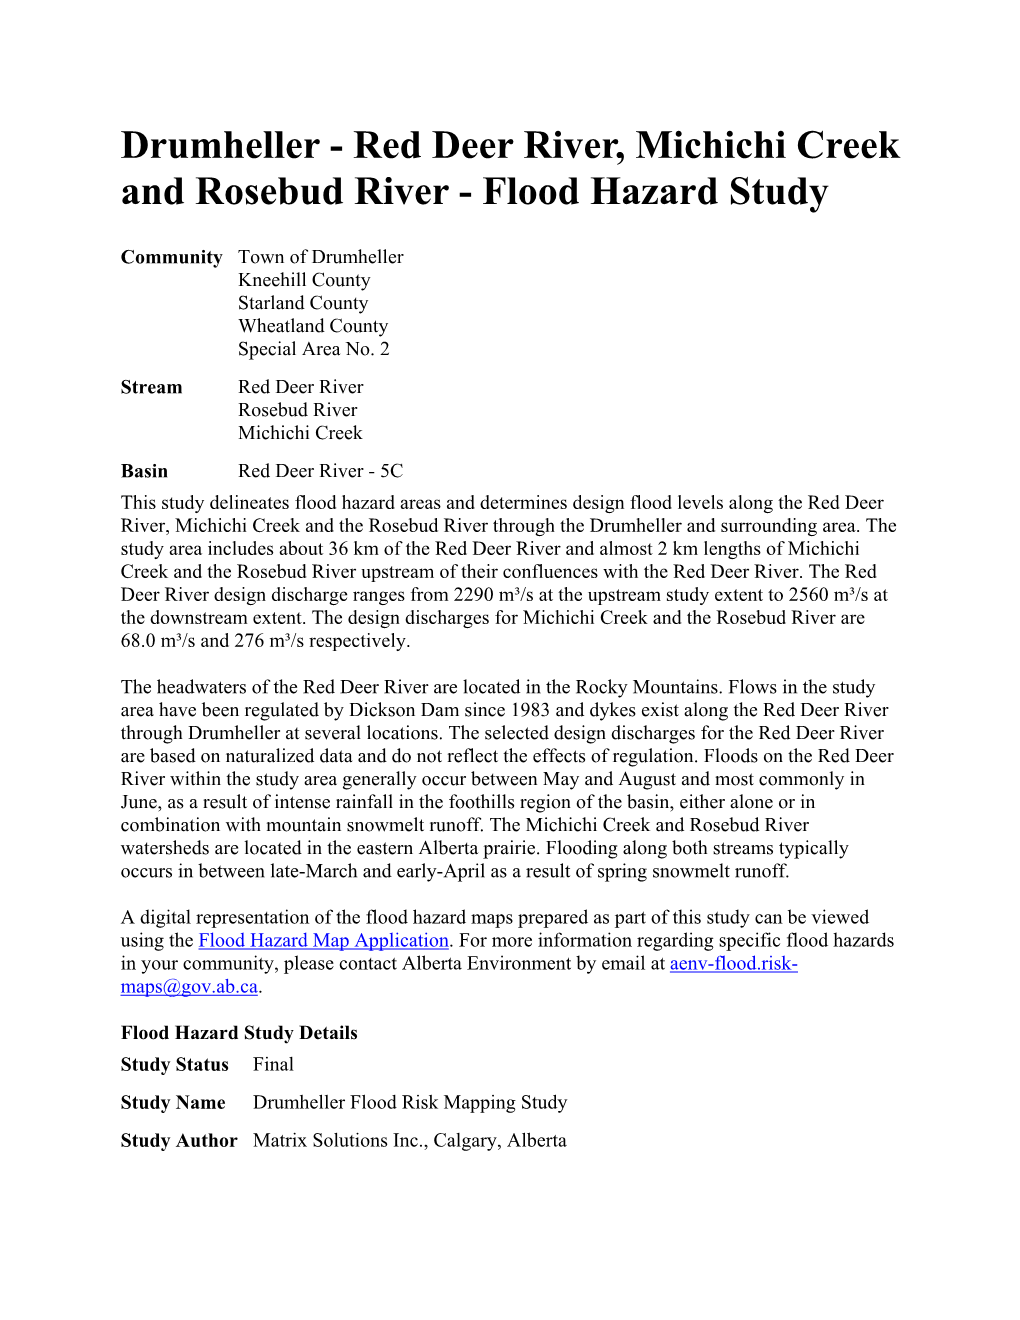 Red Deer River, Michichi Creek and Rosebud River - Flood Hazard Study